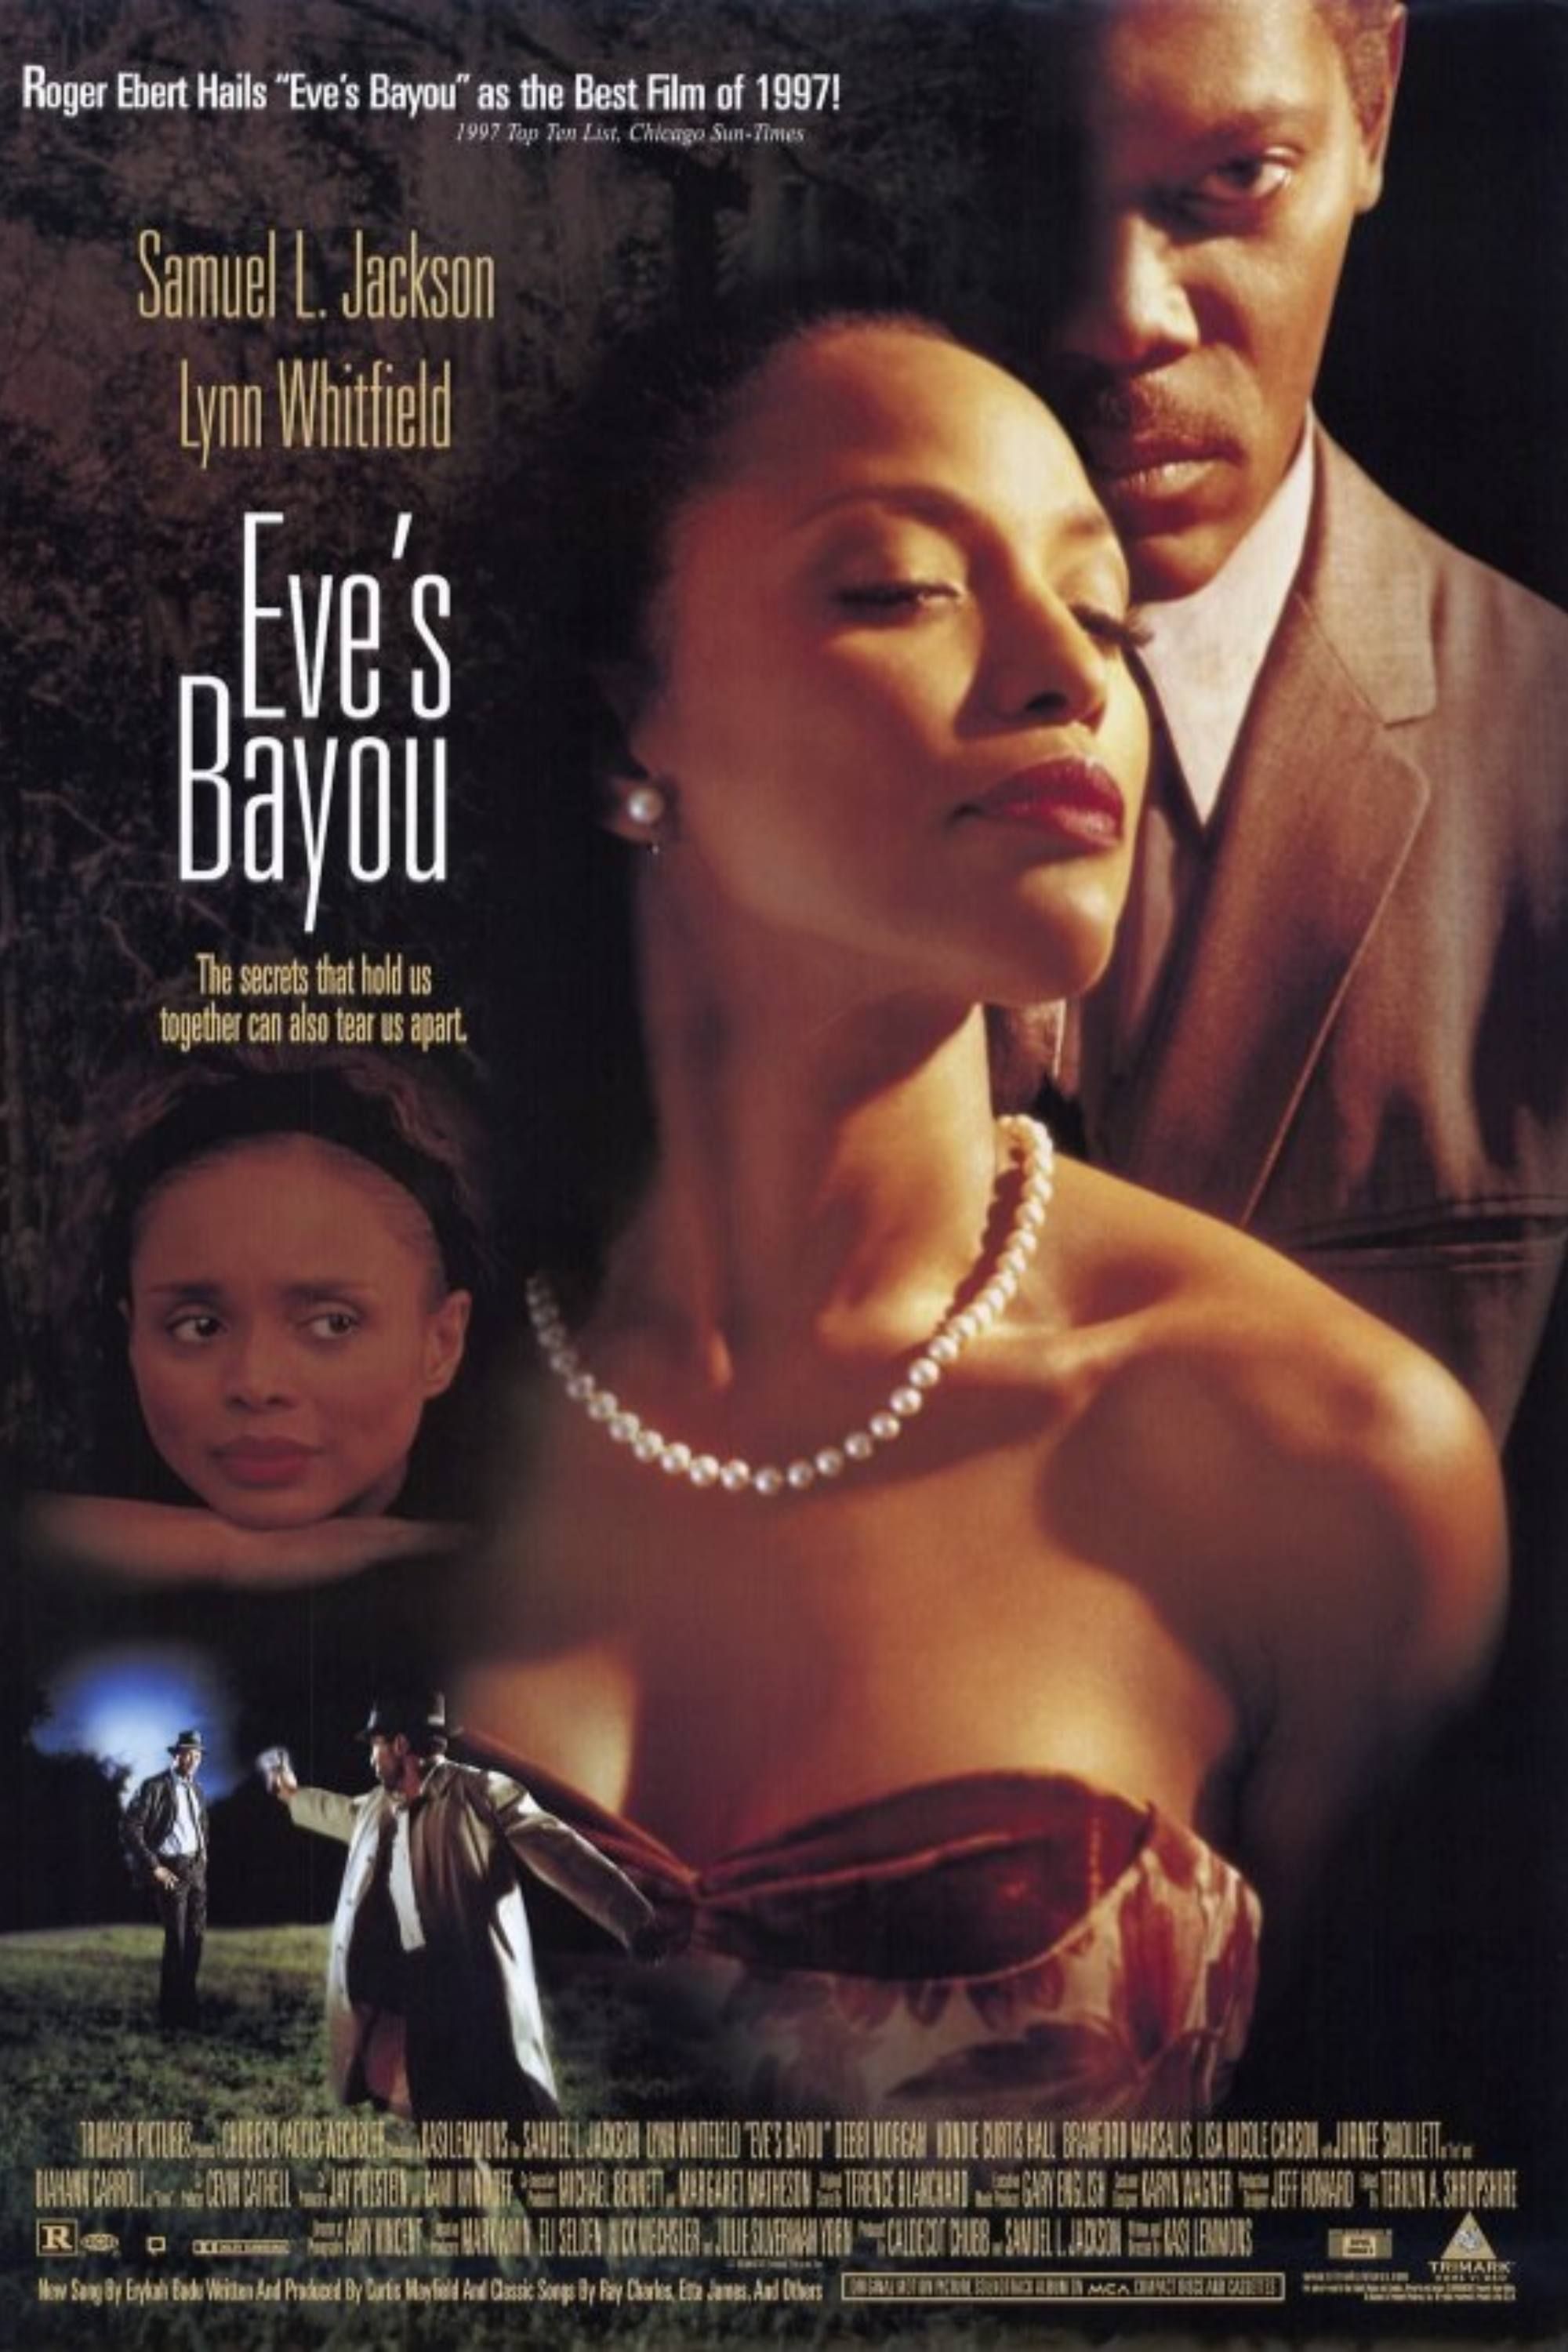 Eve's Bayou - Poster - Samuel Jackson & Lynn Whitfield